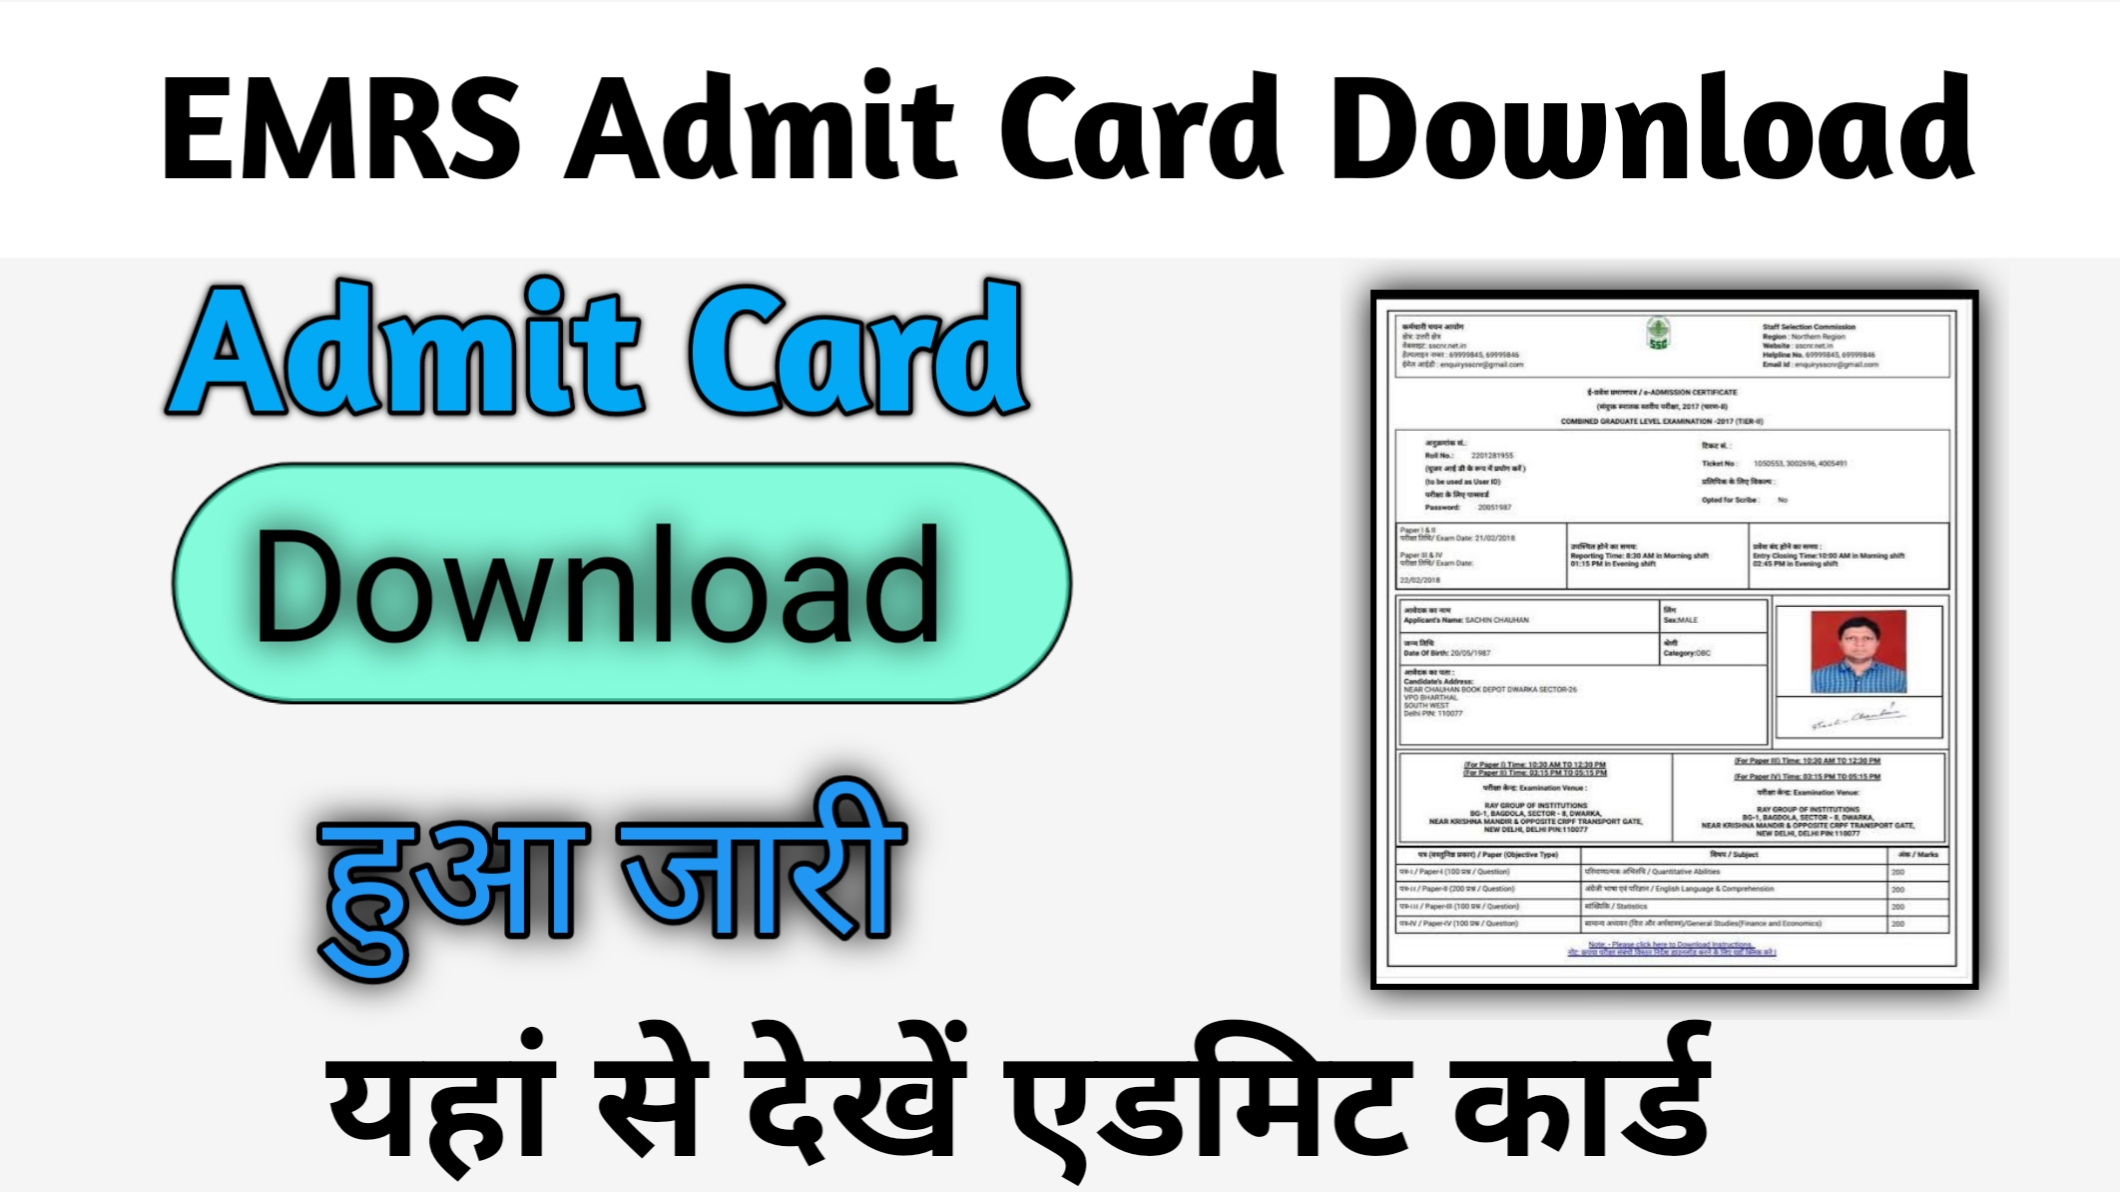 EMRS Admit Card Download Release